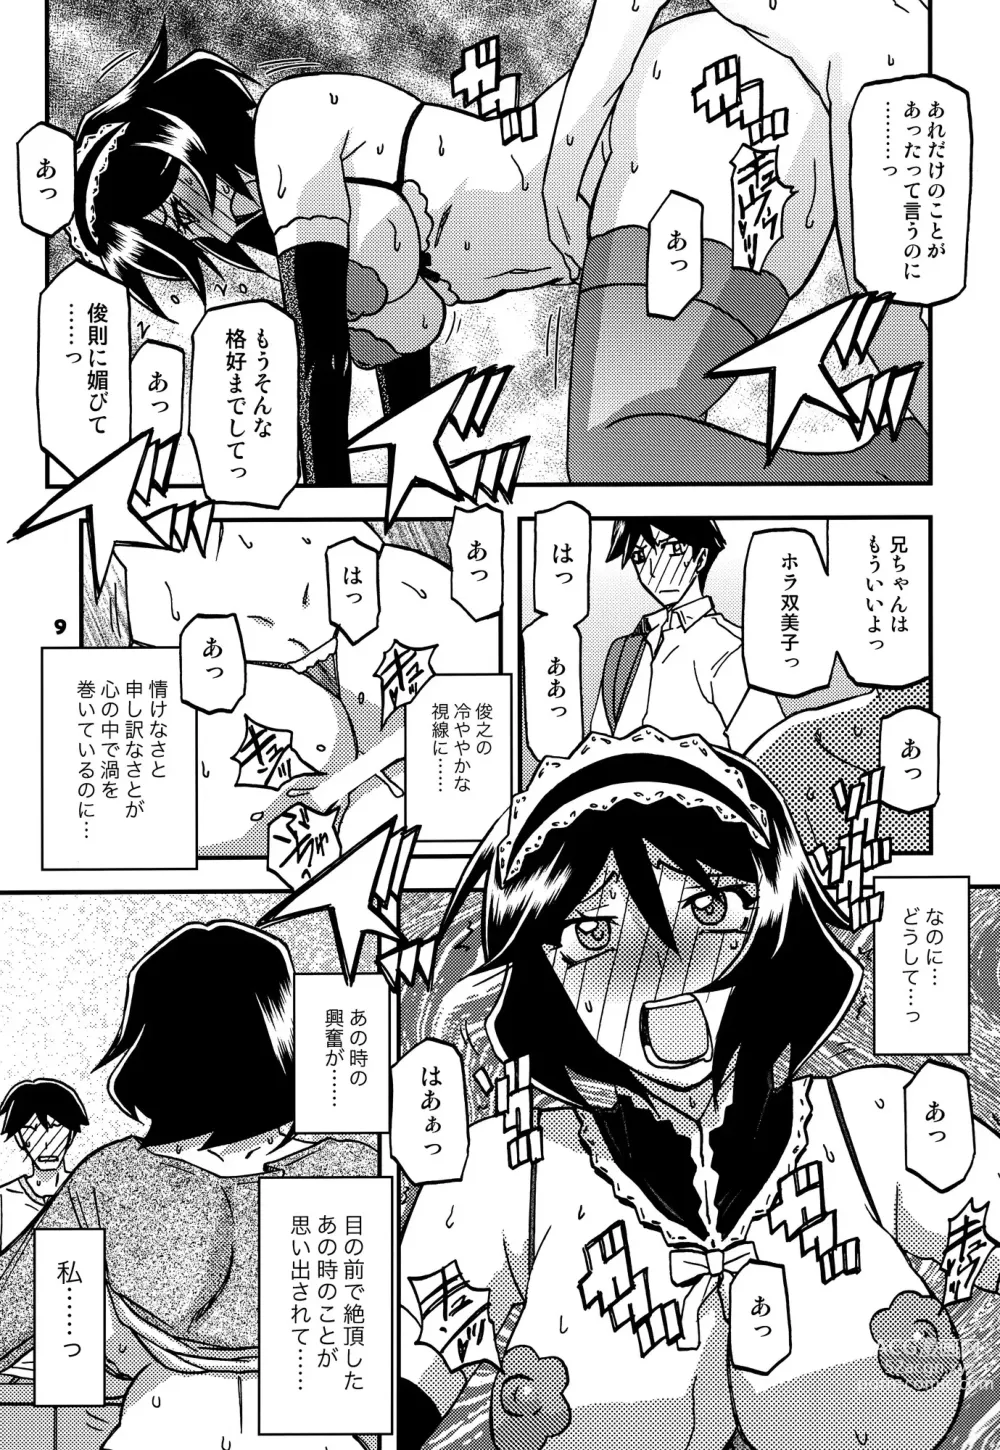 Page 8 of doujinshi Akebi no Mi - Fumiko CONTINUATION